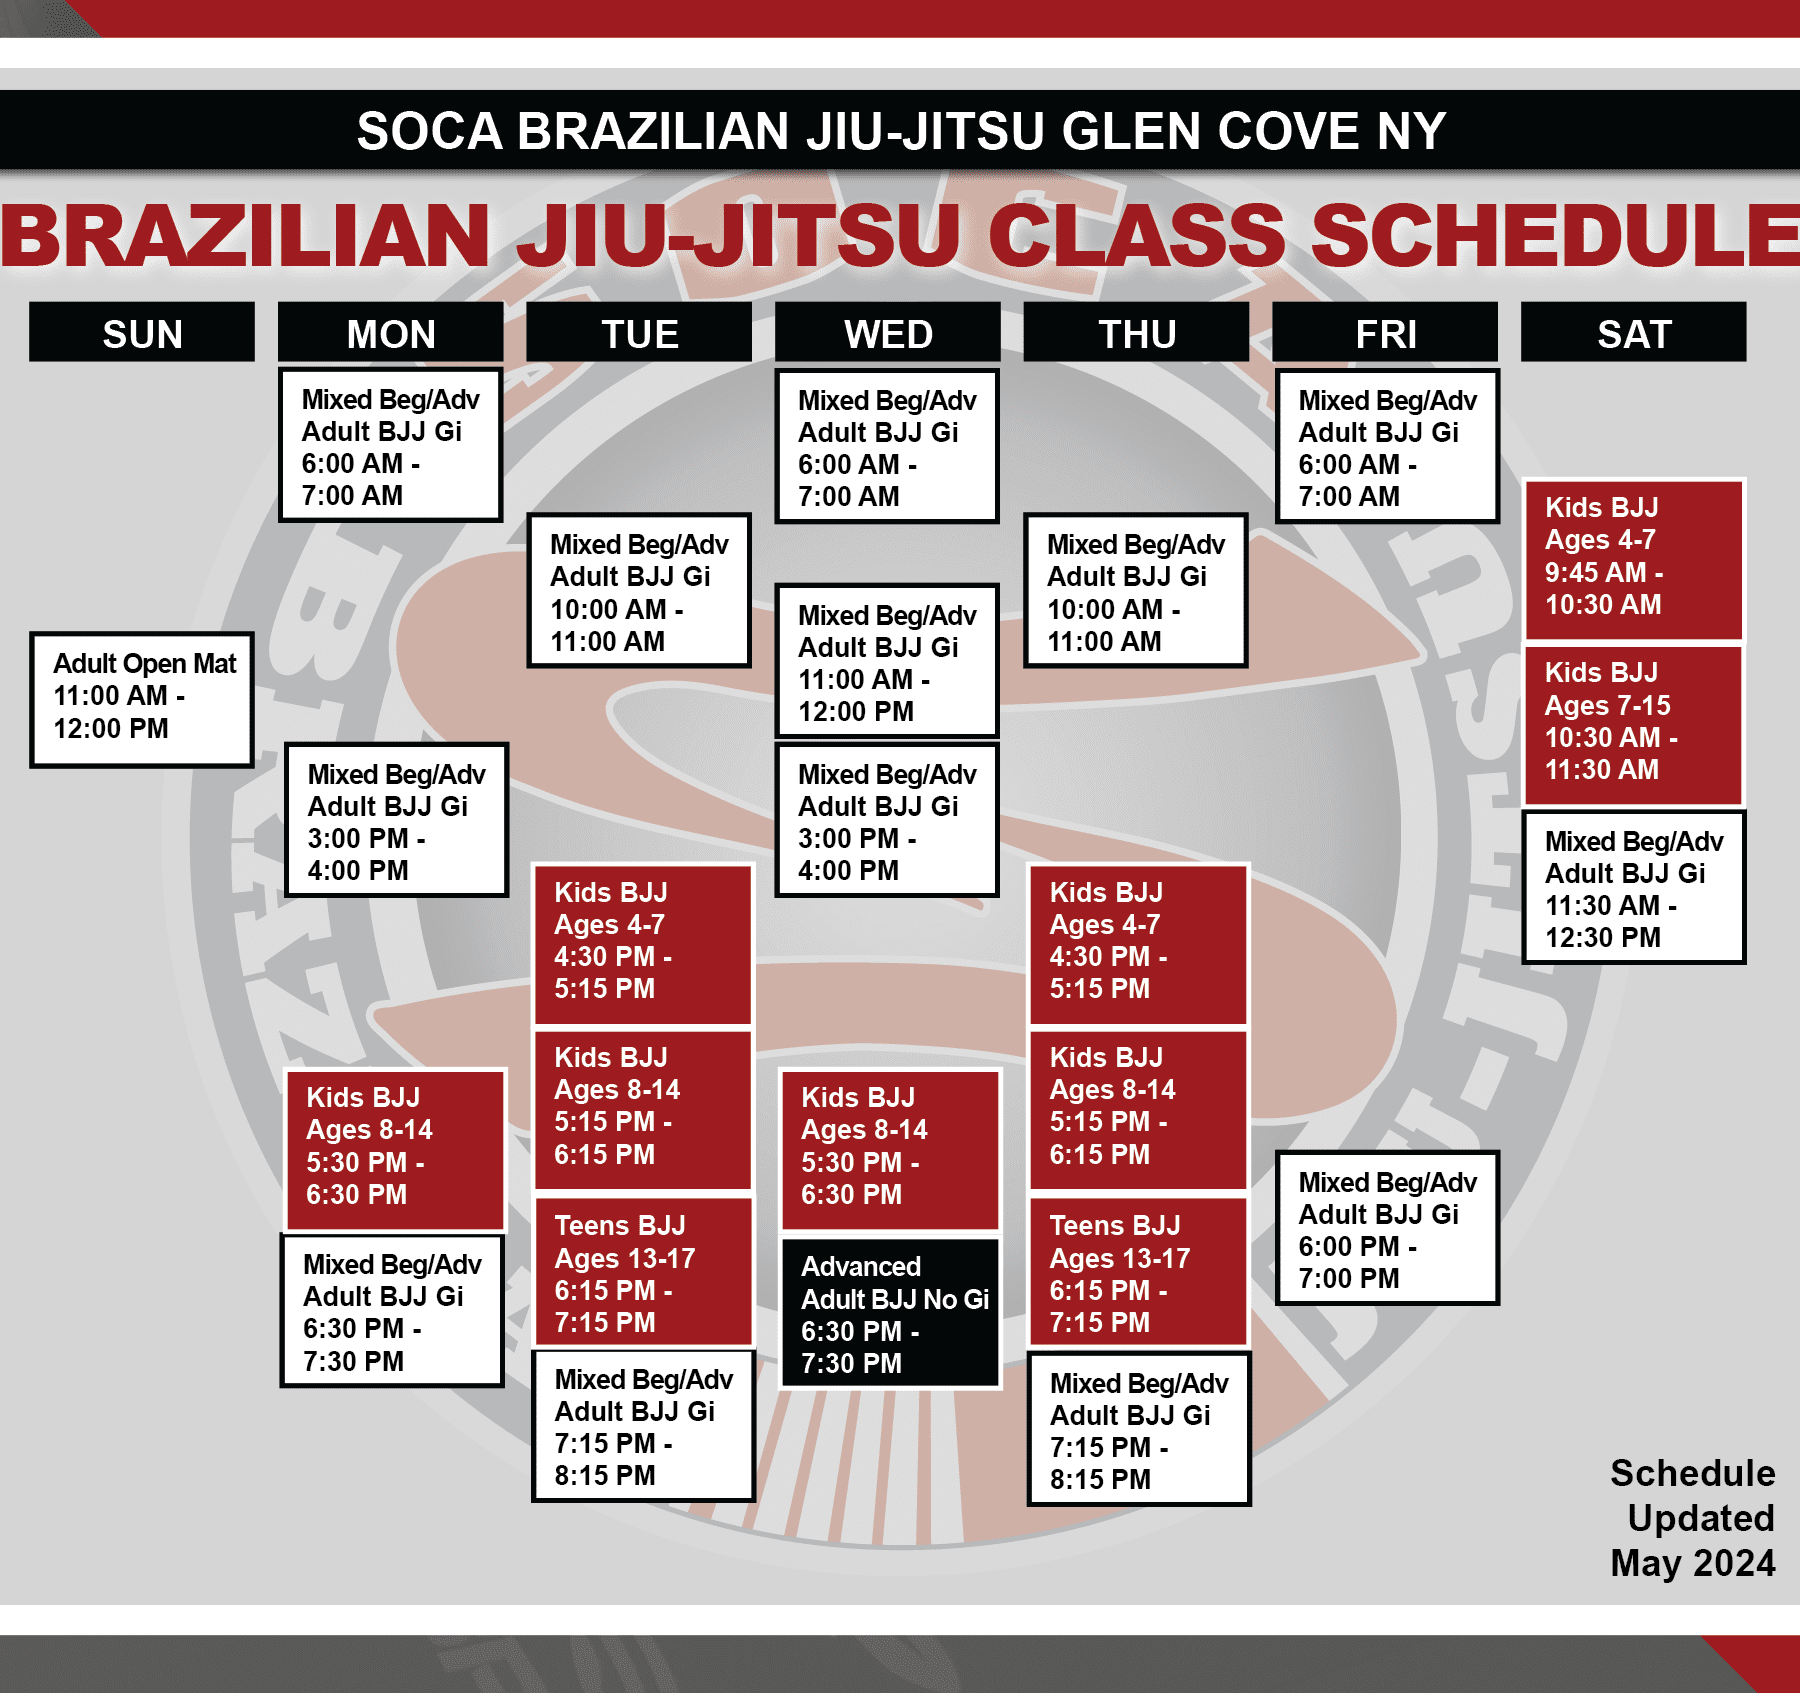 Soca Brazilian Jiu Jitsu Glen Cove Schedule - updated May 2024